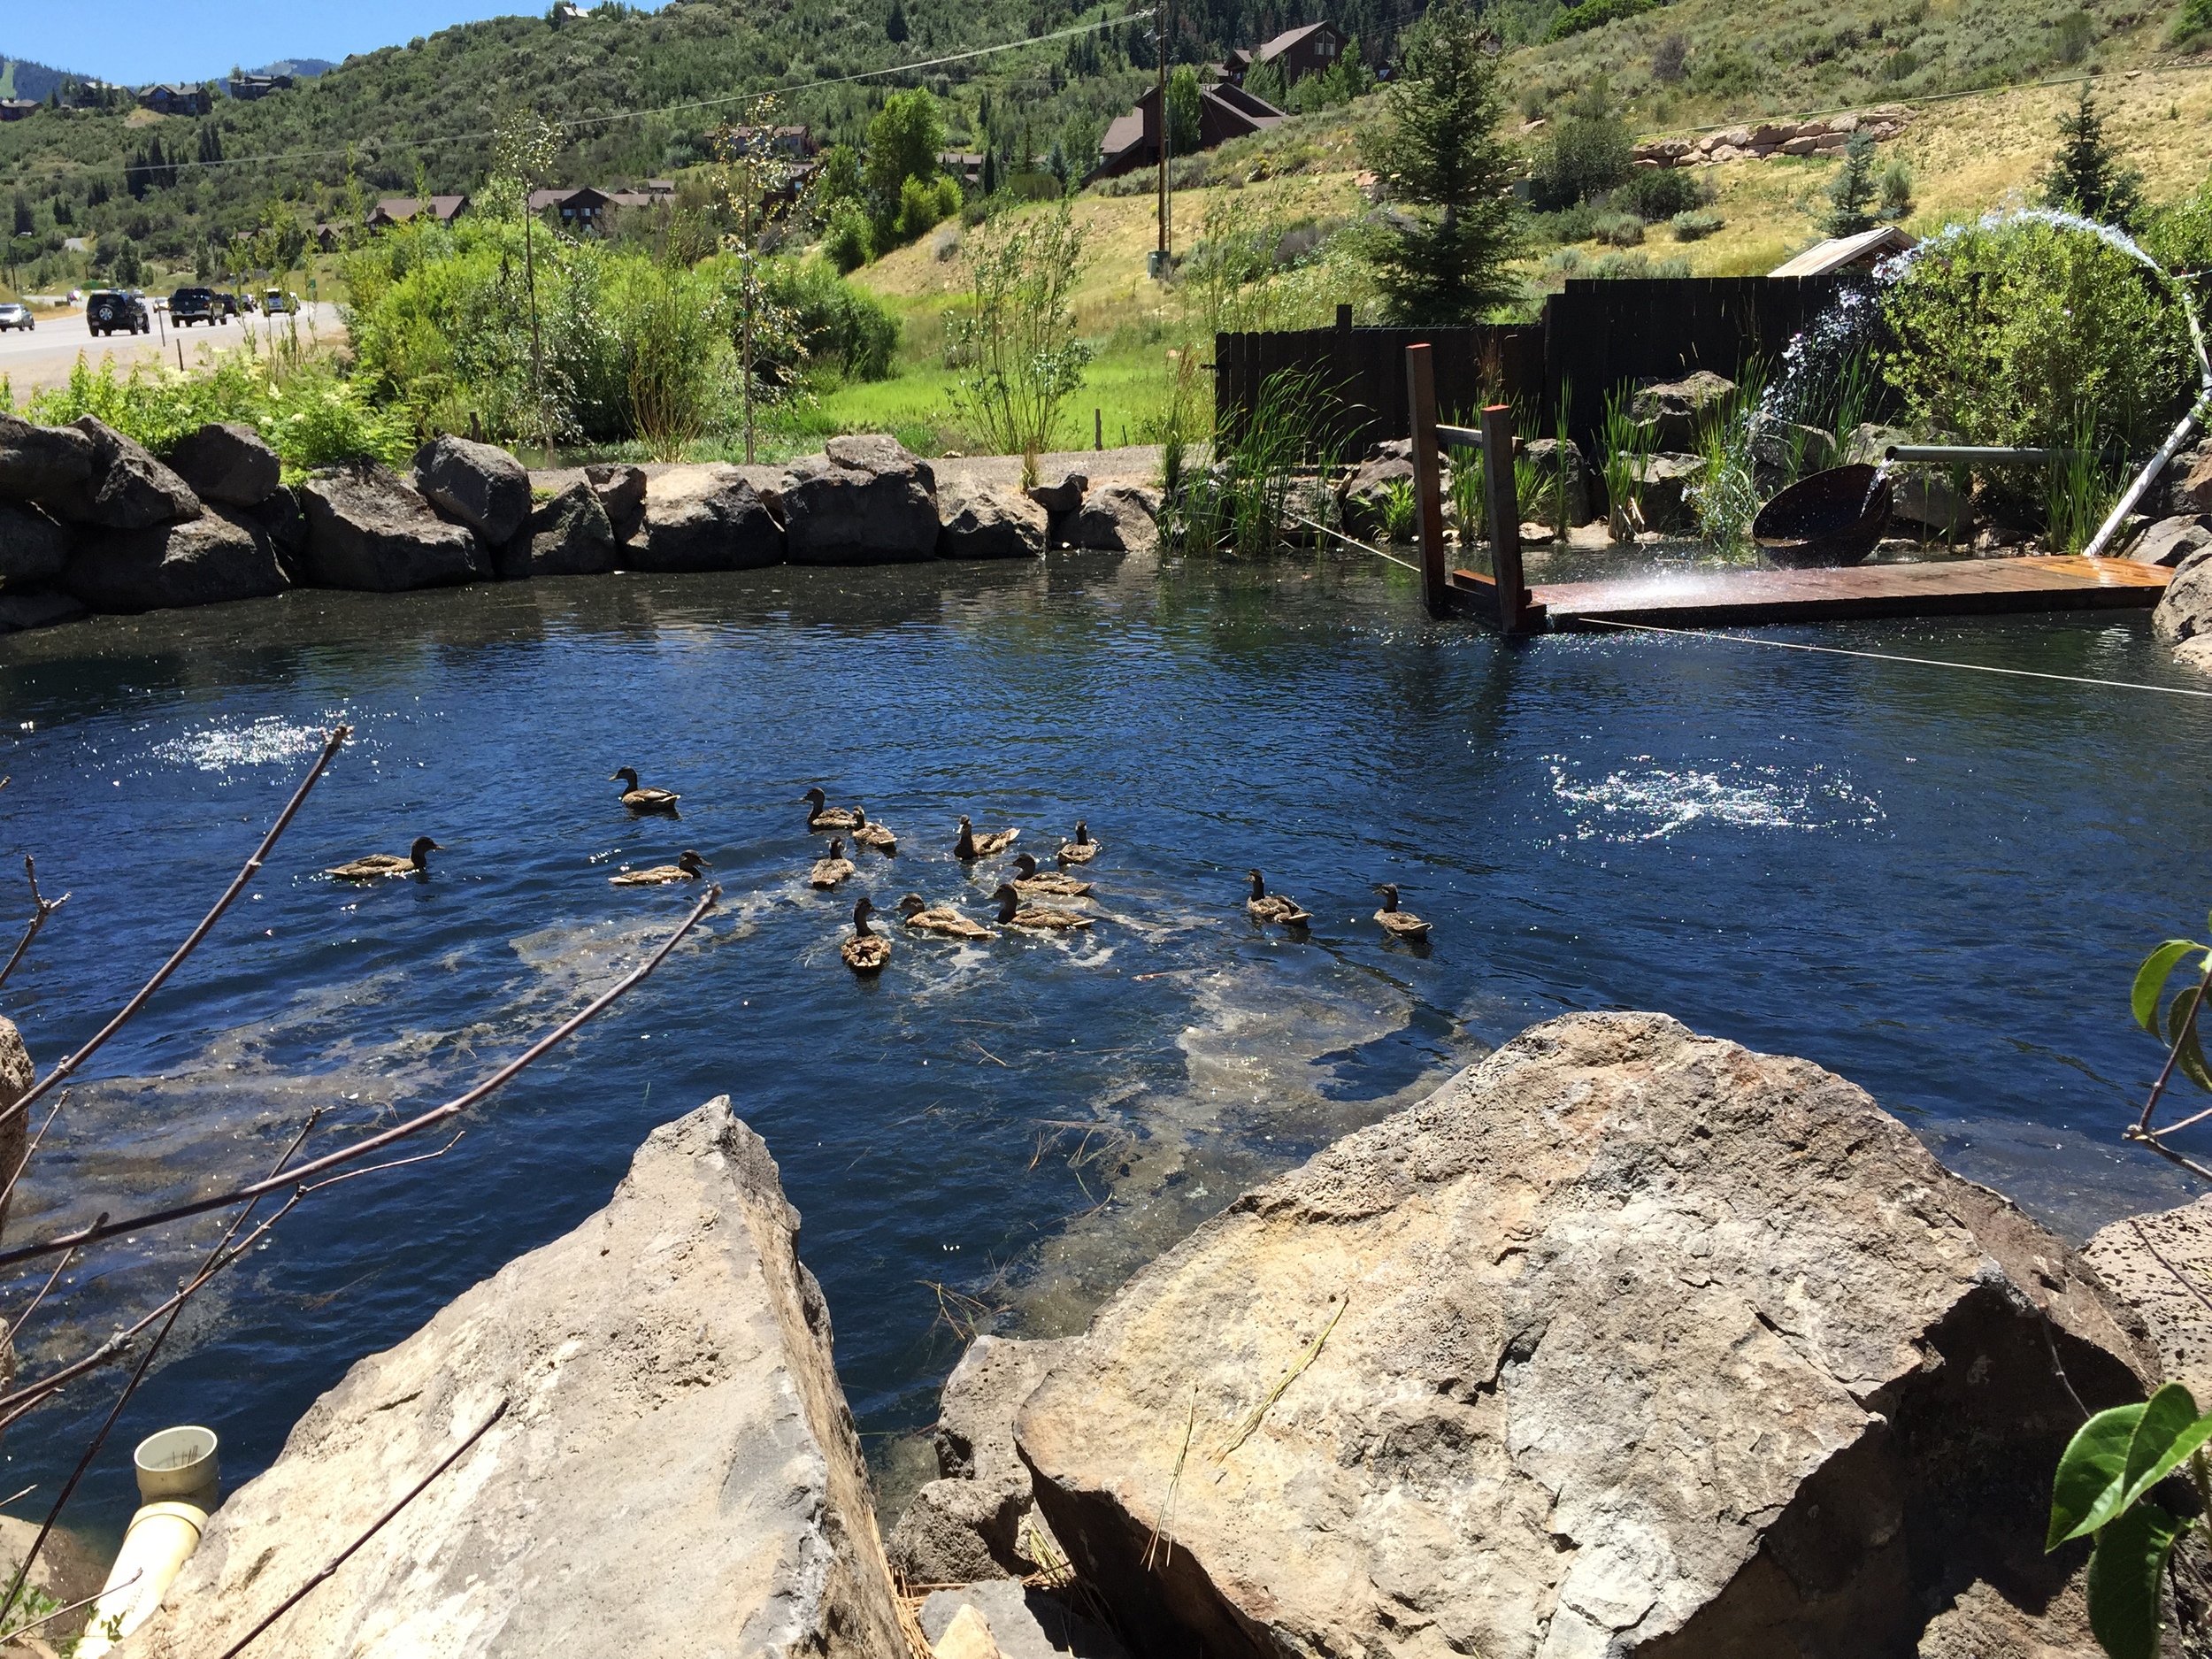 Ducks loving their pond